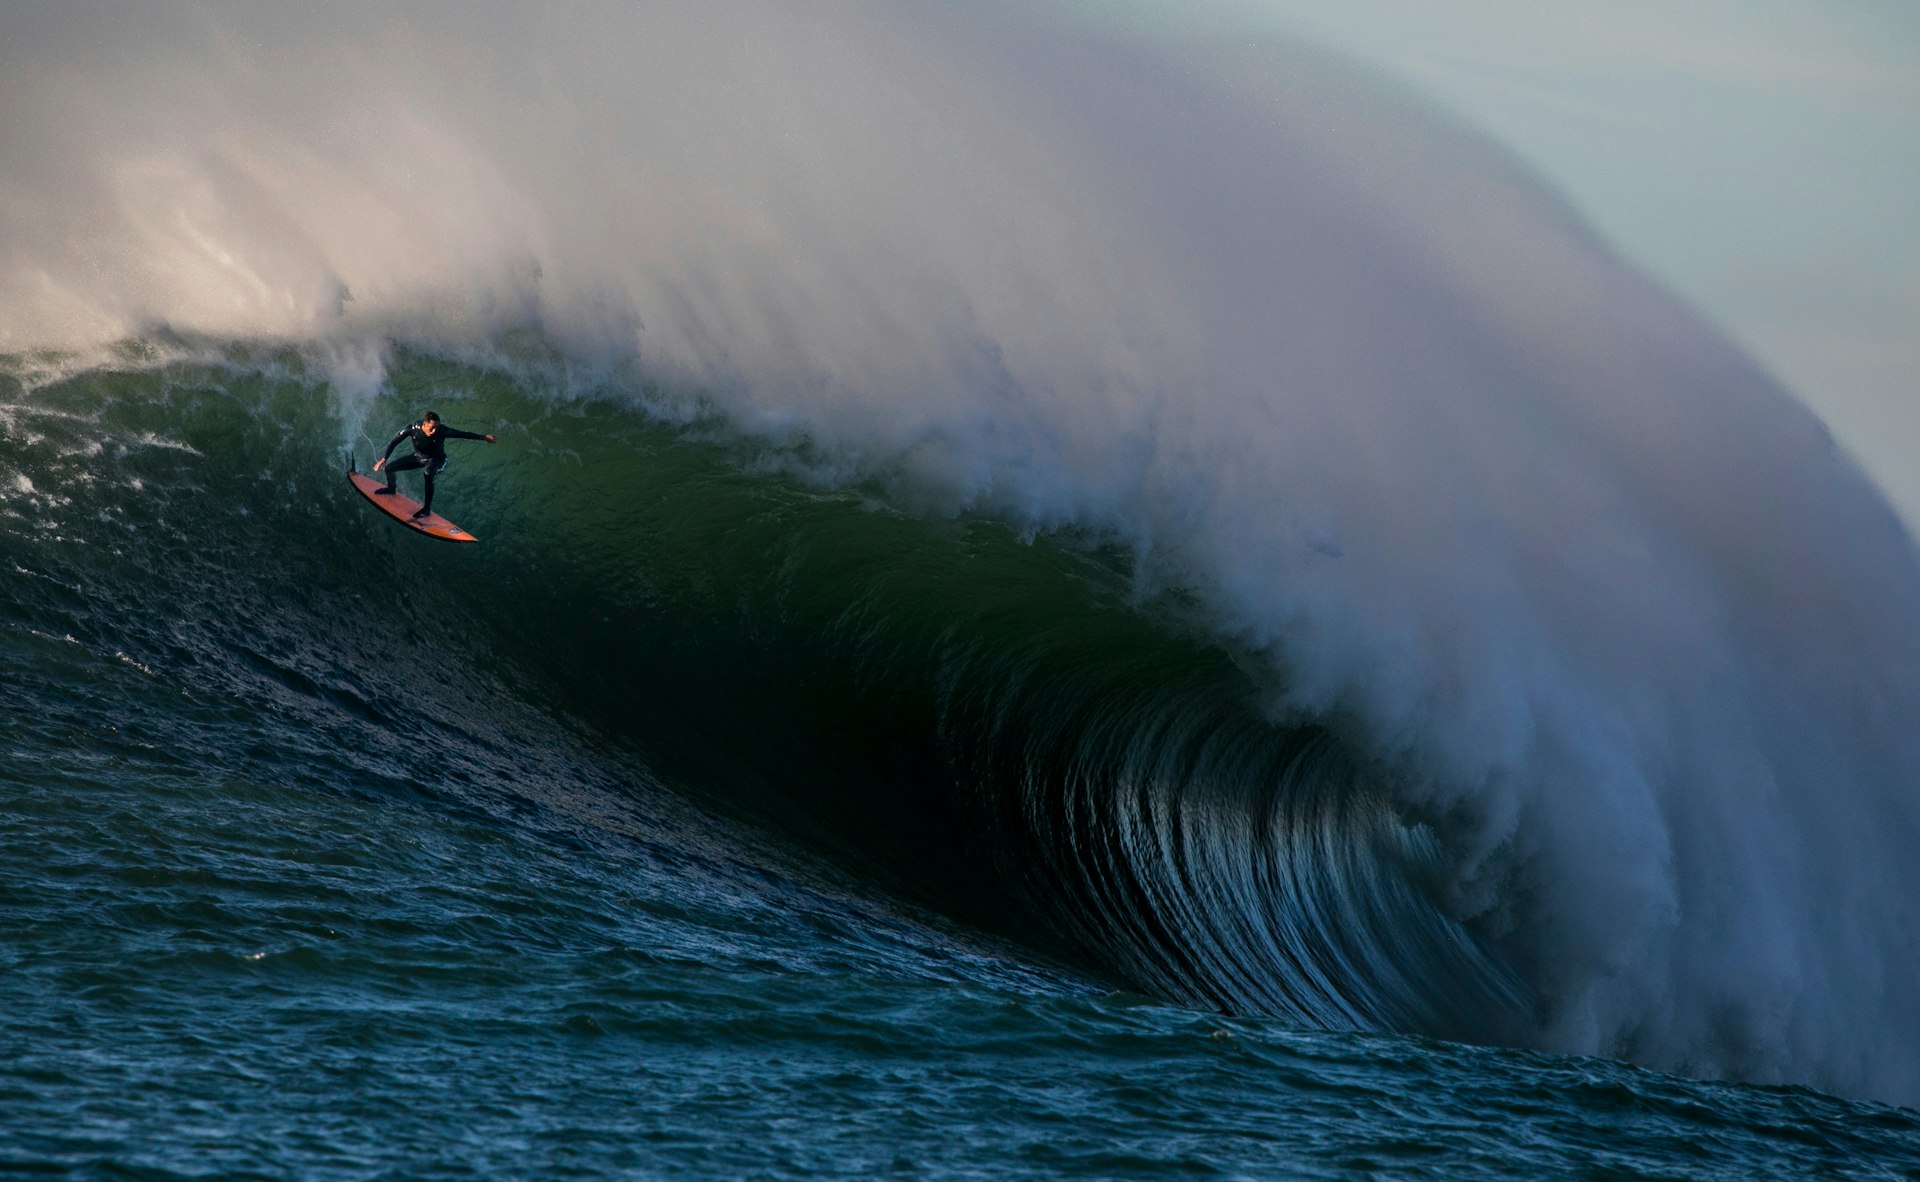 shuttSurfers ride massive waves at Mavericks, a surf break south of San Francisco in California